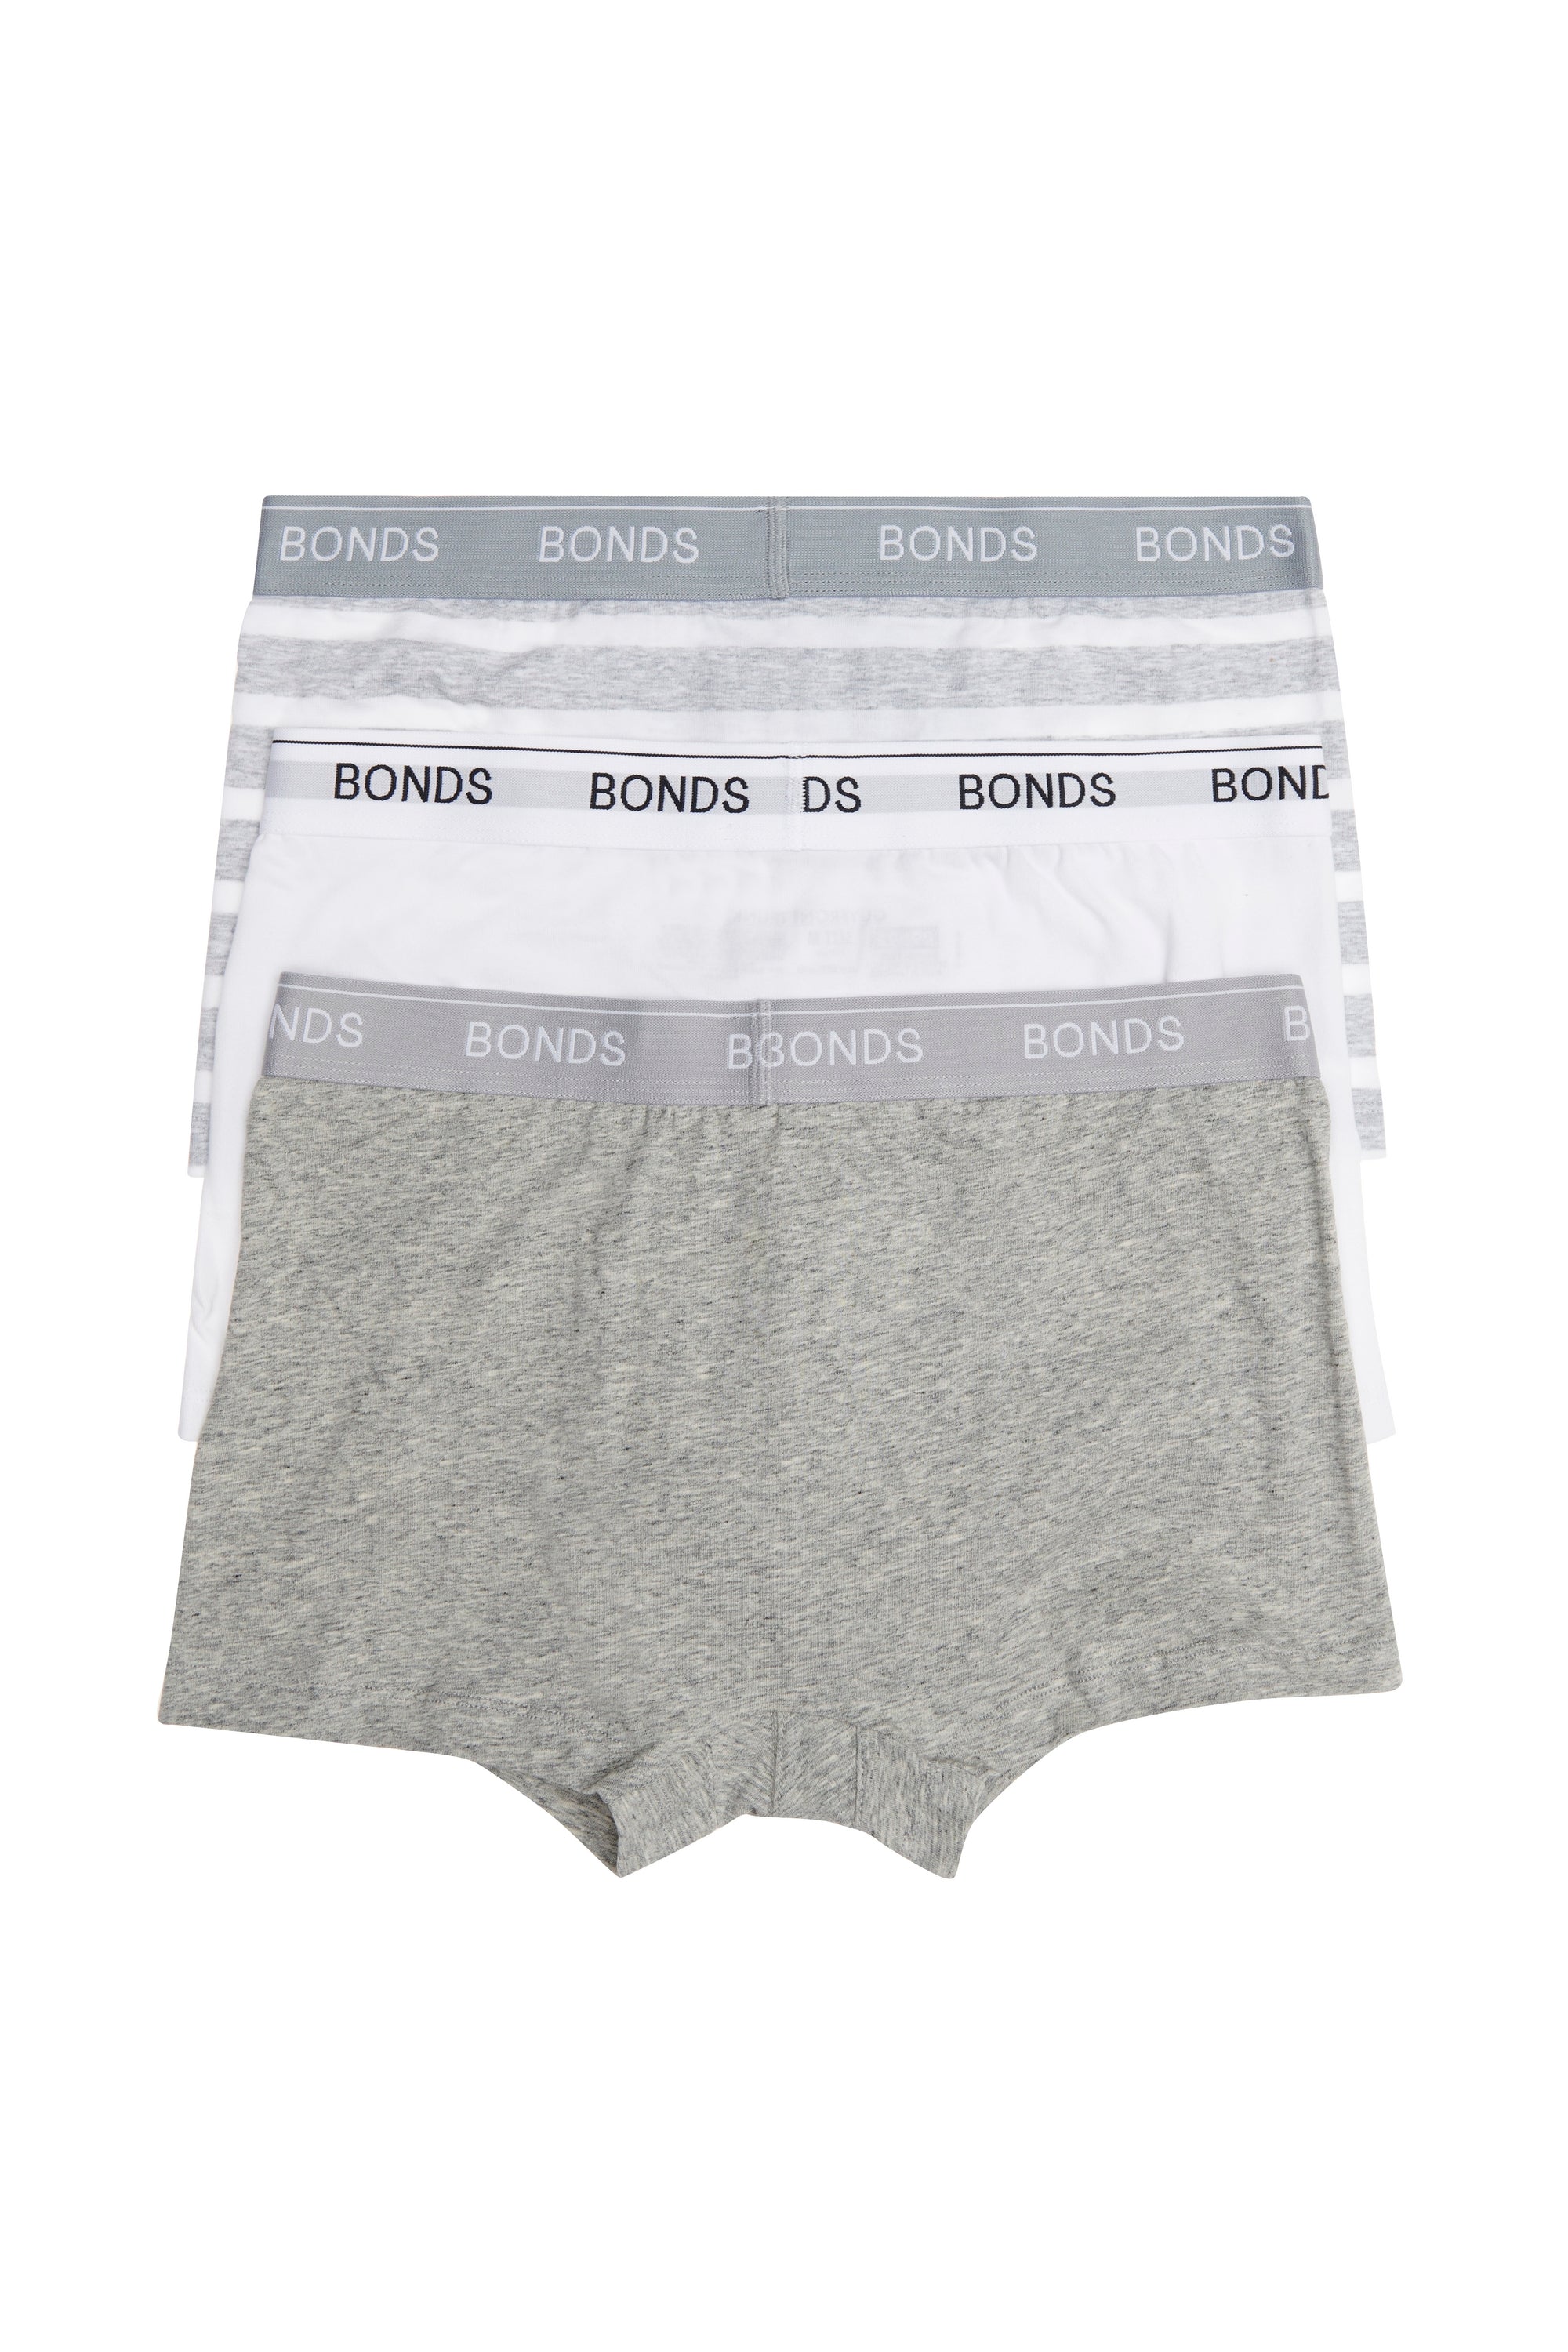 9 X Mens Bonds Guyfront Trunk Trunks Underwear – Grey Stripe – Tie